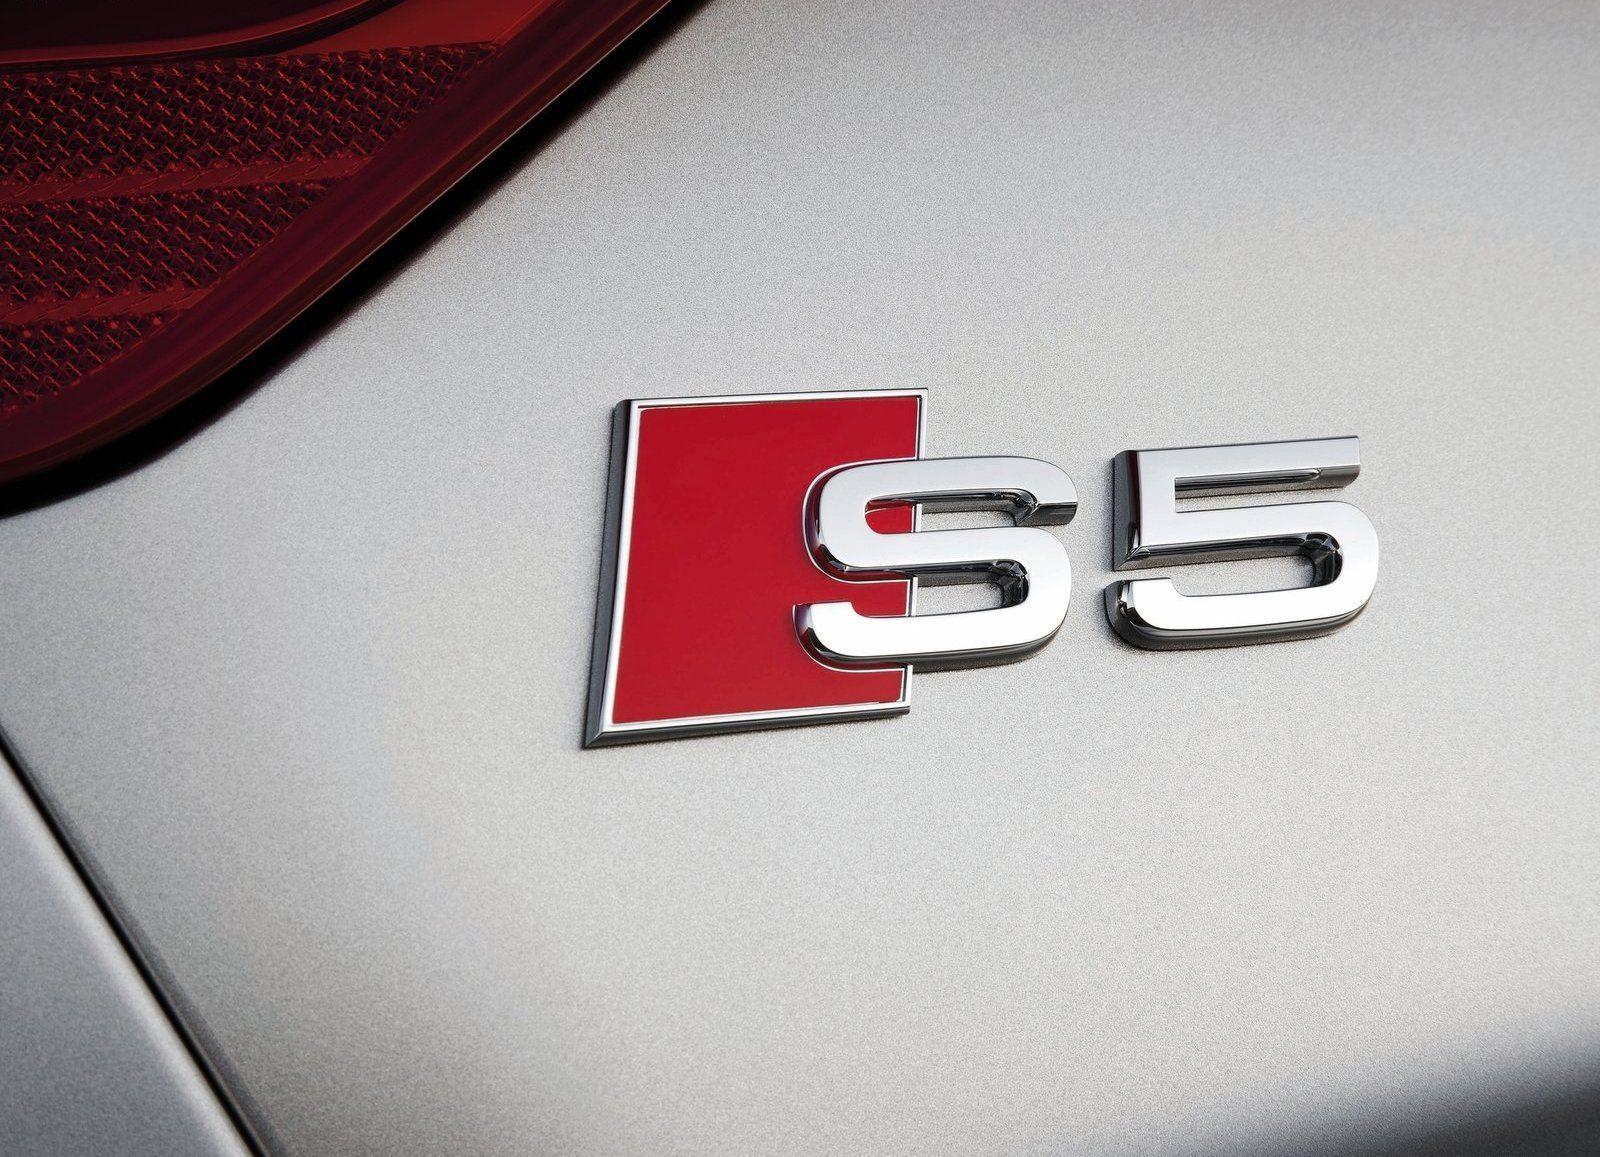 S5 Logo - Audi S5 Logo - Car Pictures, Images – GaddiDekho.com